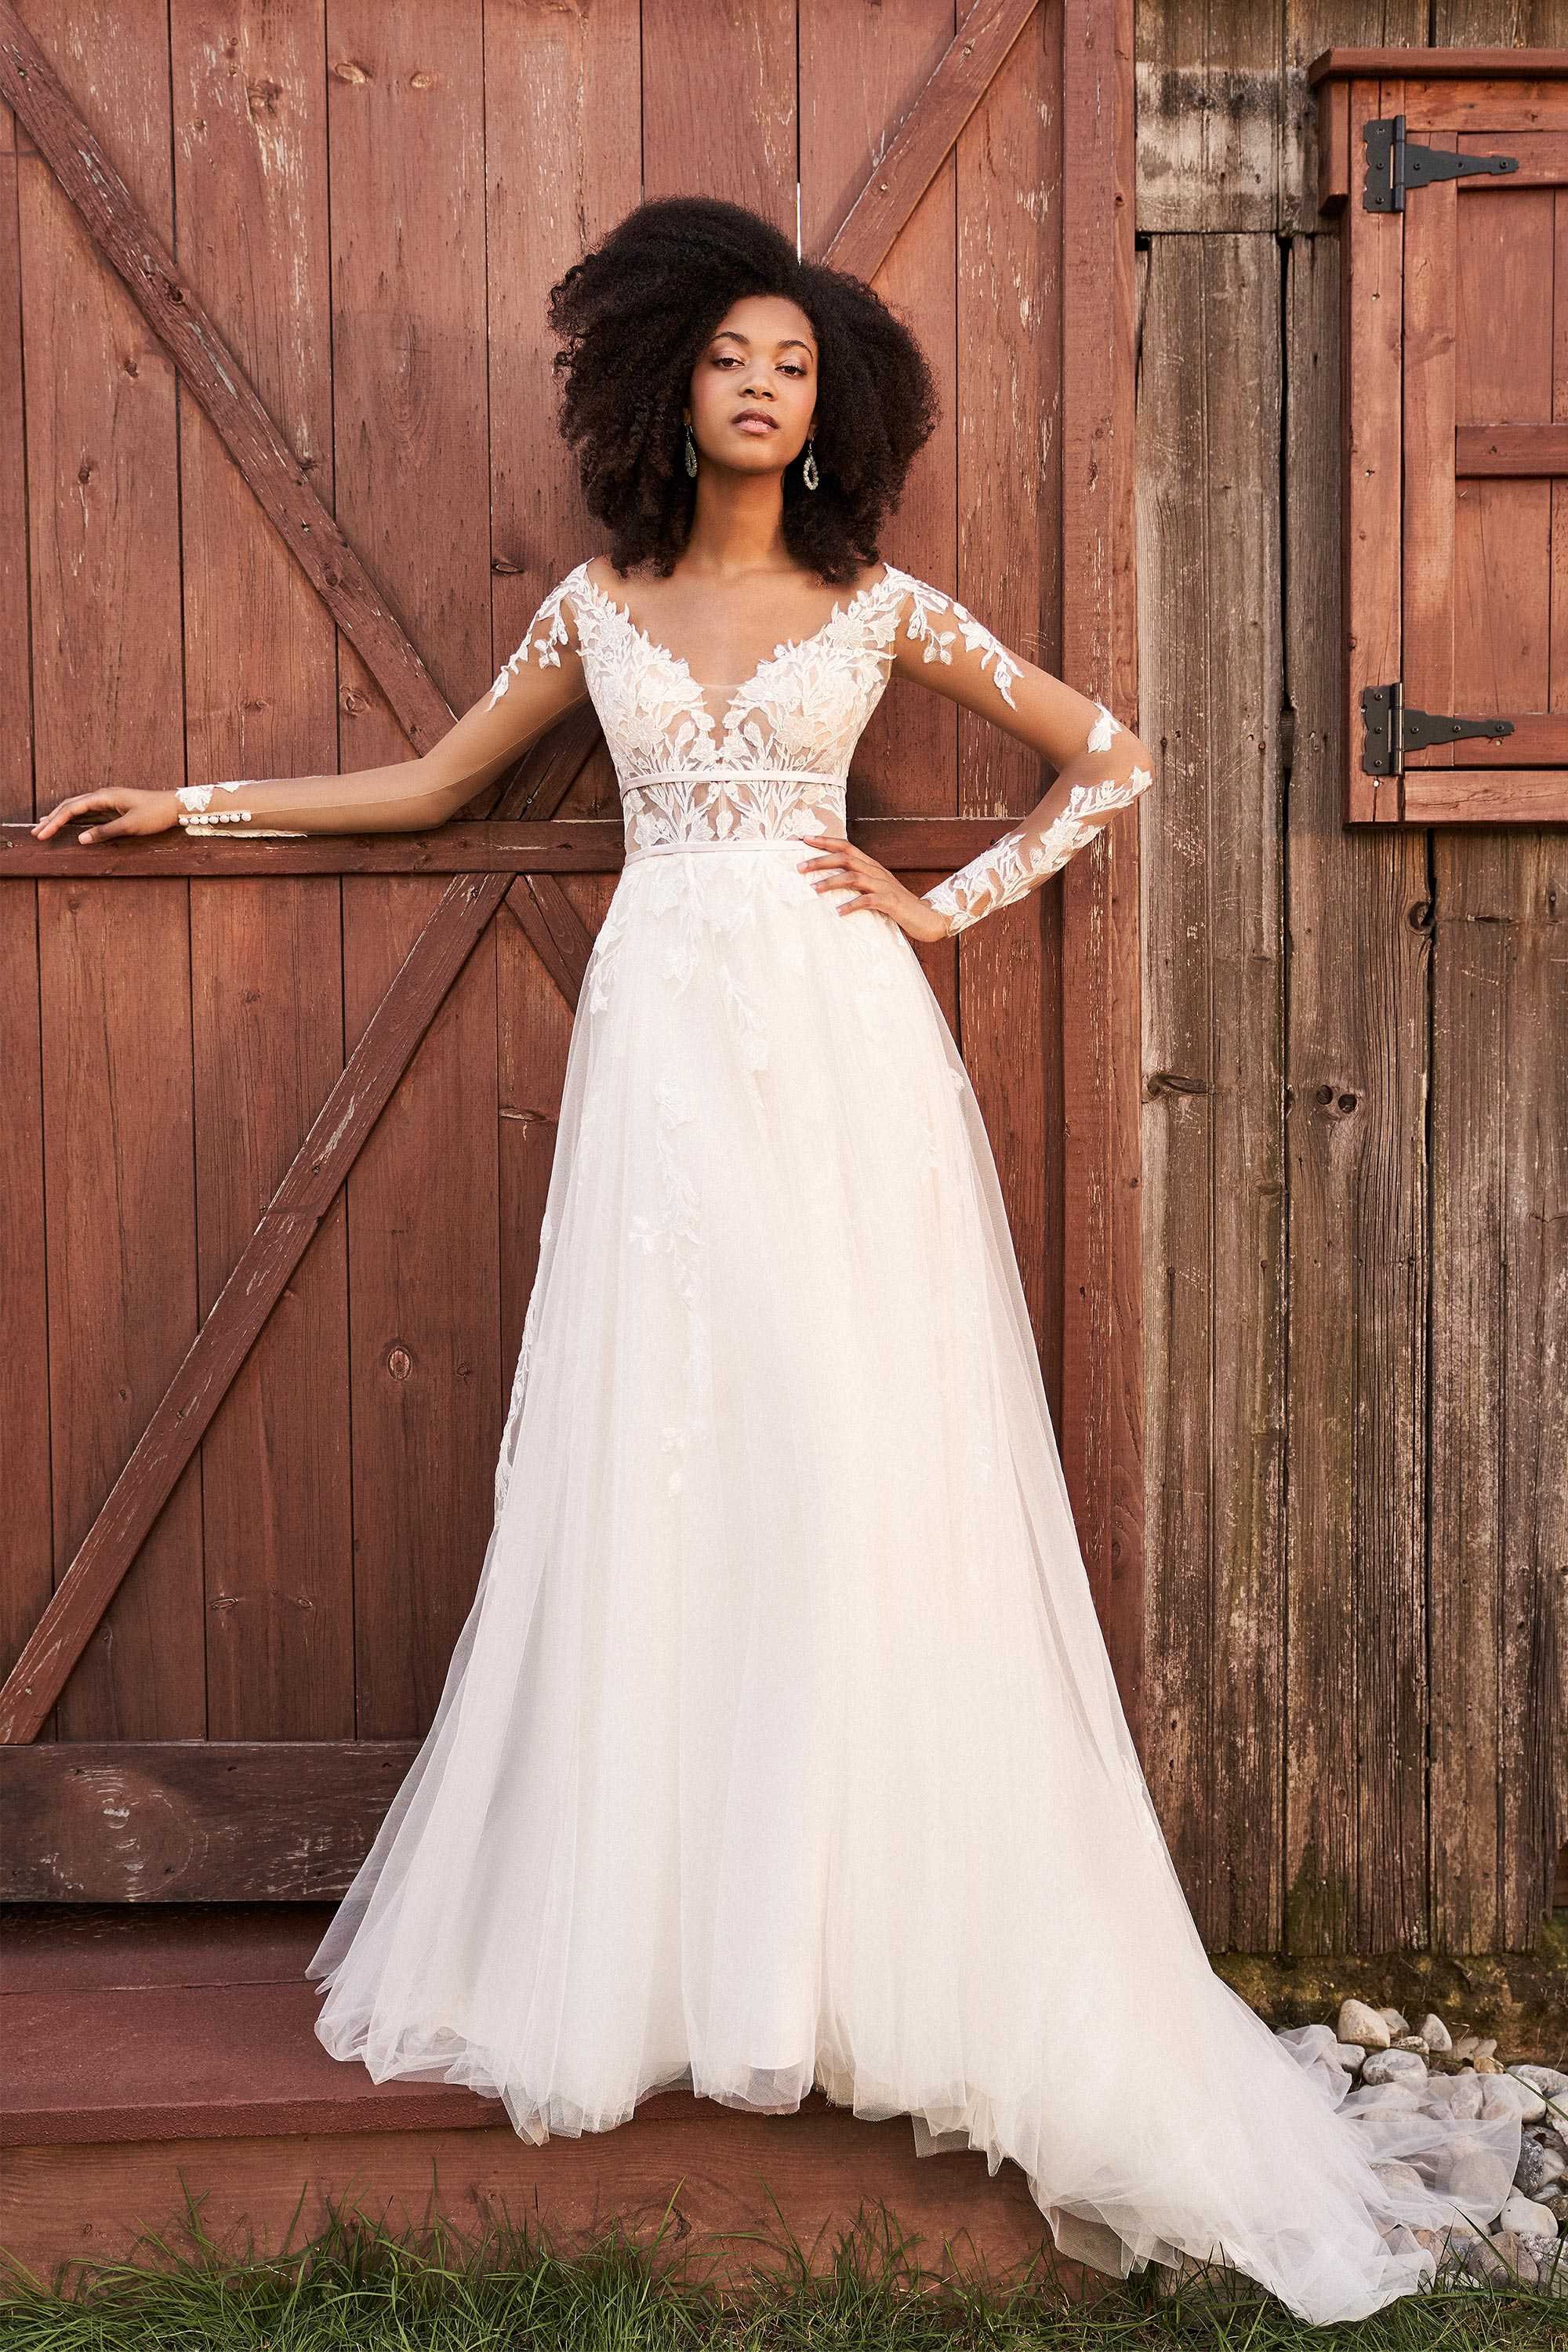 blanc-de-blanc-bridal-boutique-pittsburgh-cleveland-dress-wedding-gown-lillian-west-66192.jpeg